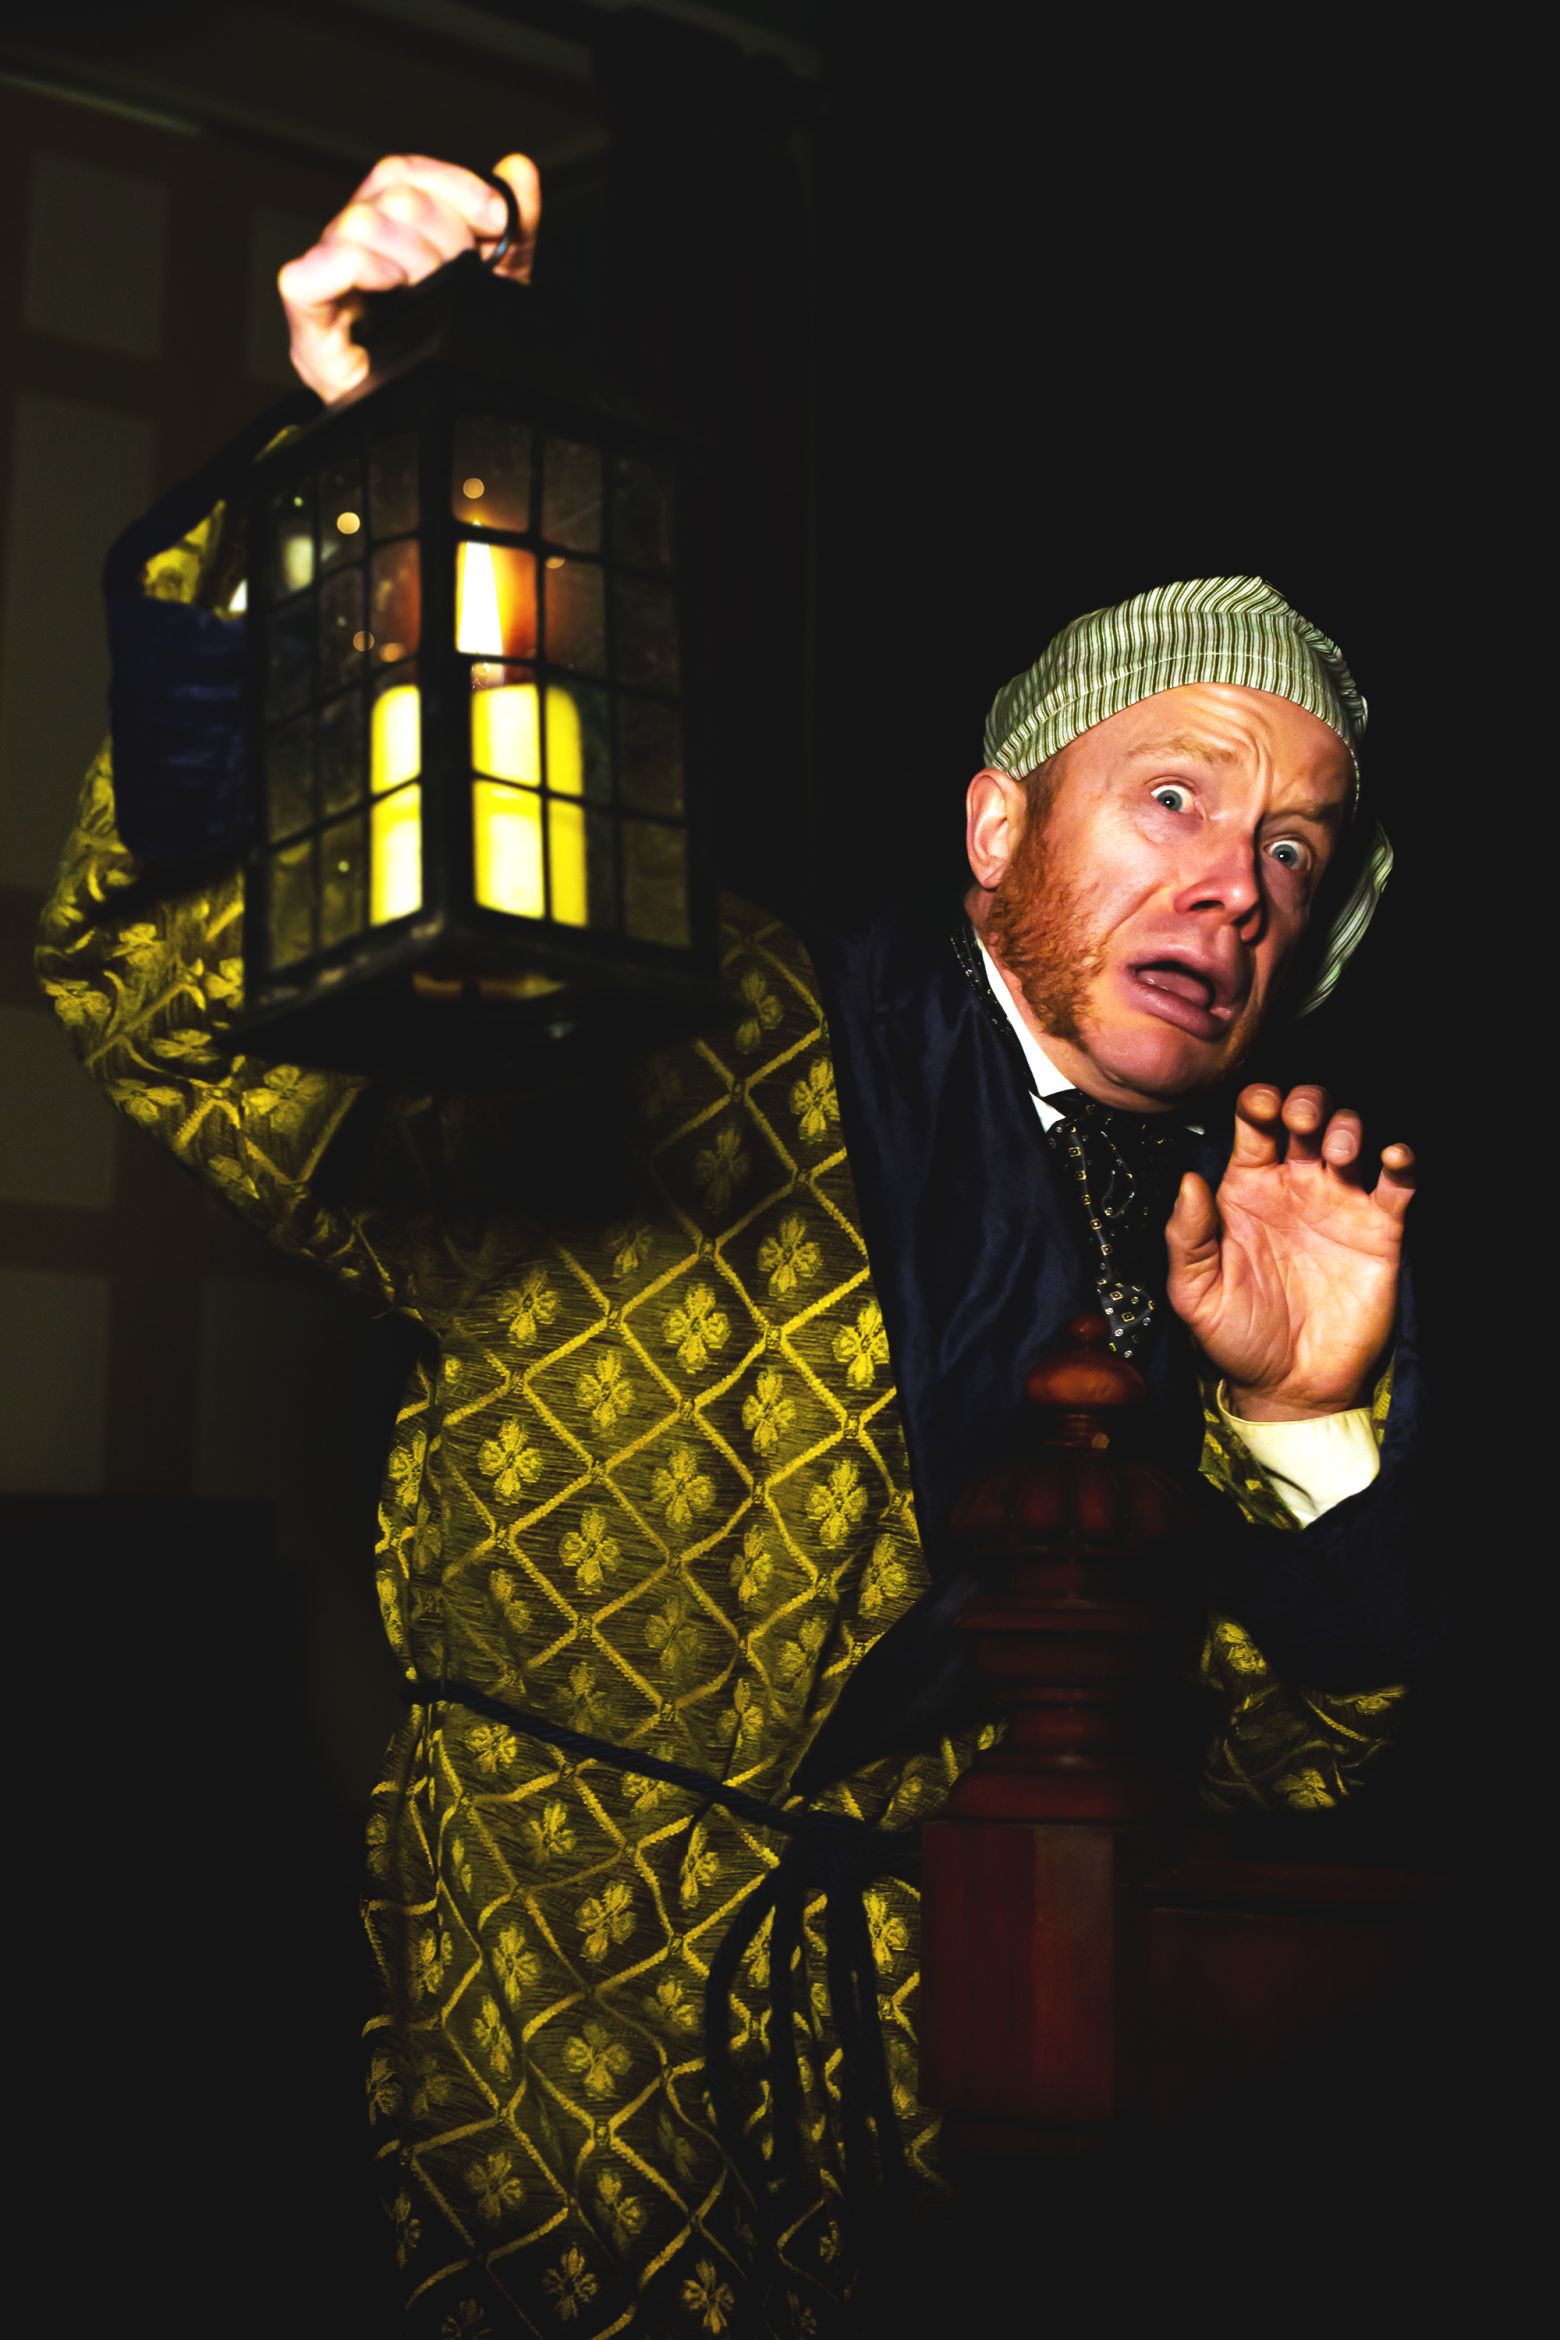 Ebenezer Scrooge in night robe holding a lantern, looking scared